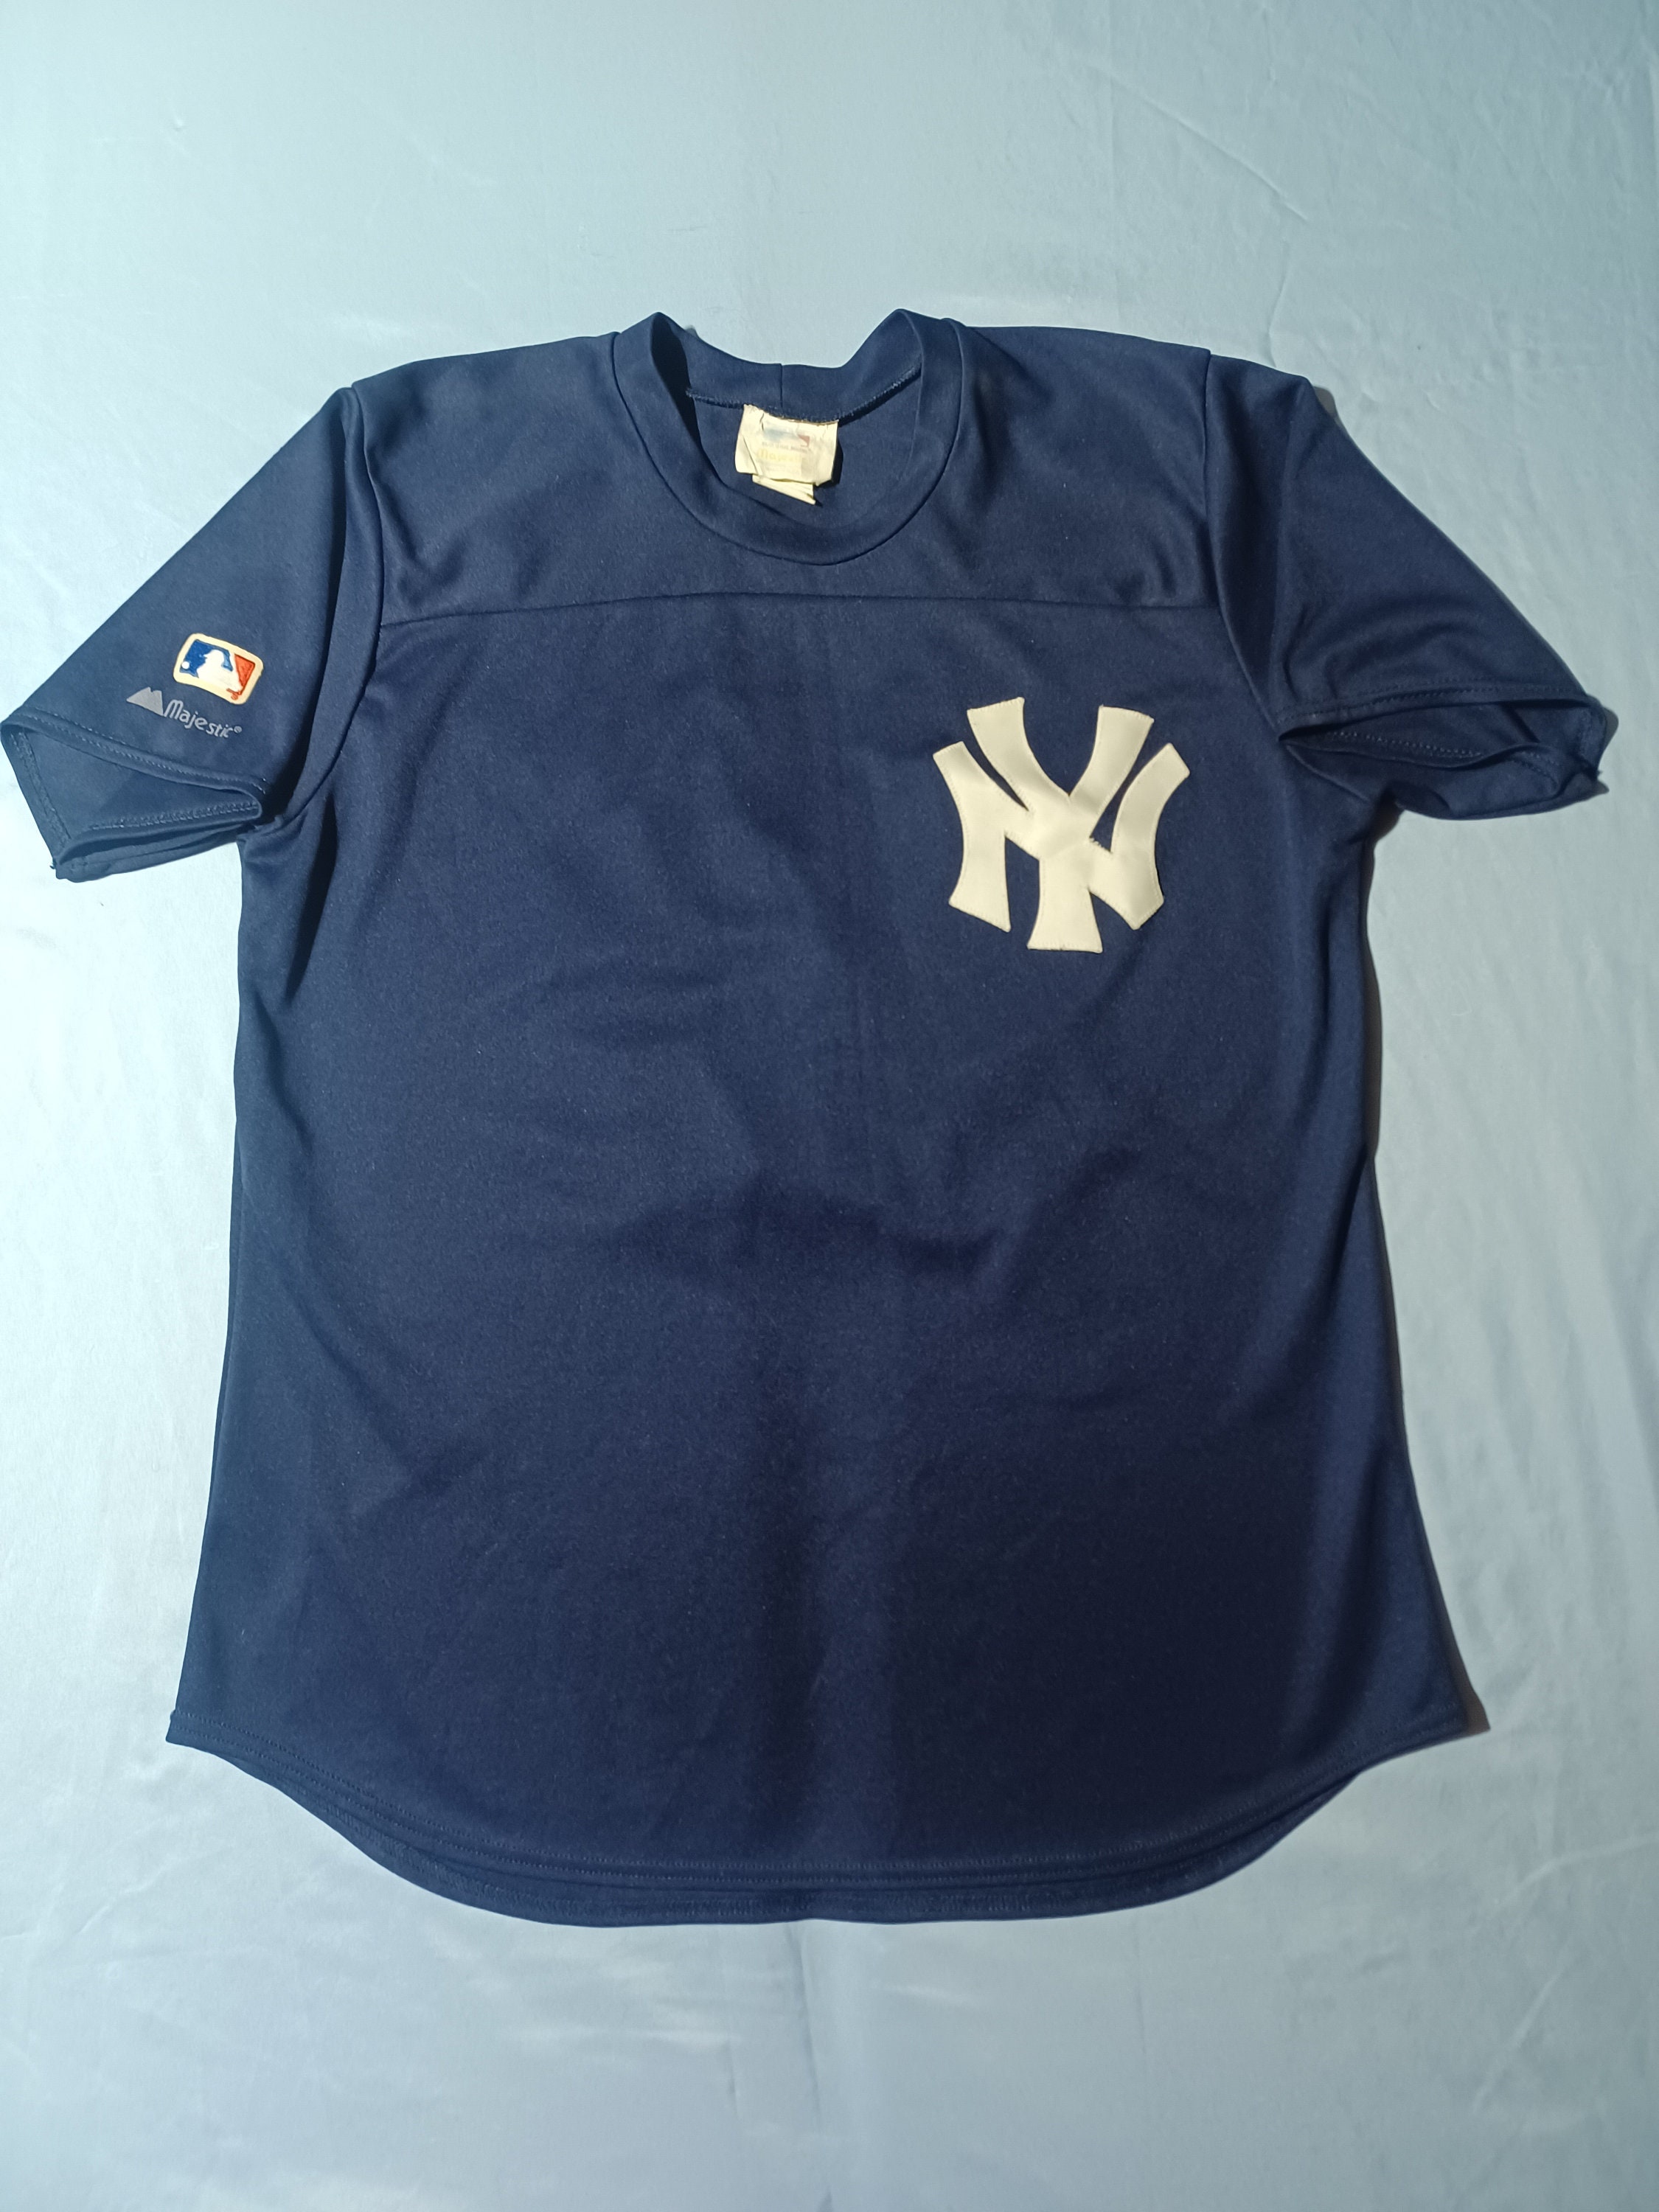 Derek Jeter Vintage Jersey New York Yankees Rookie Season Large Majestic  USA 90s